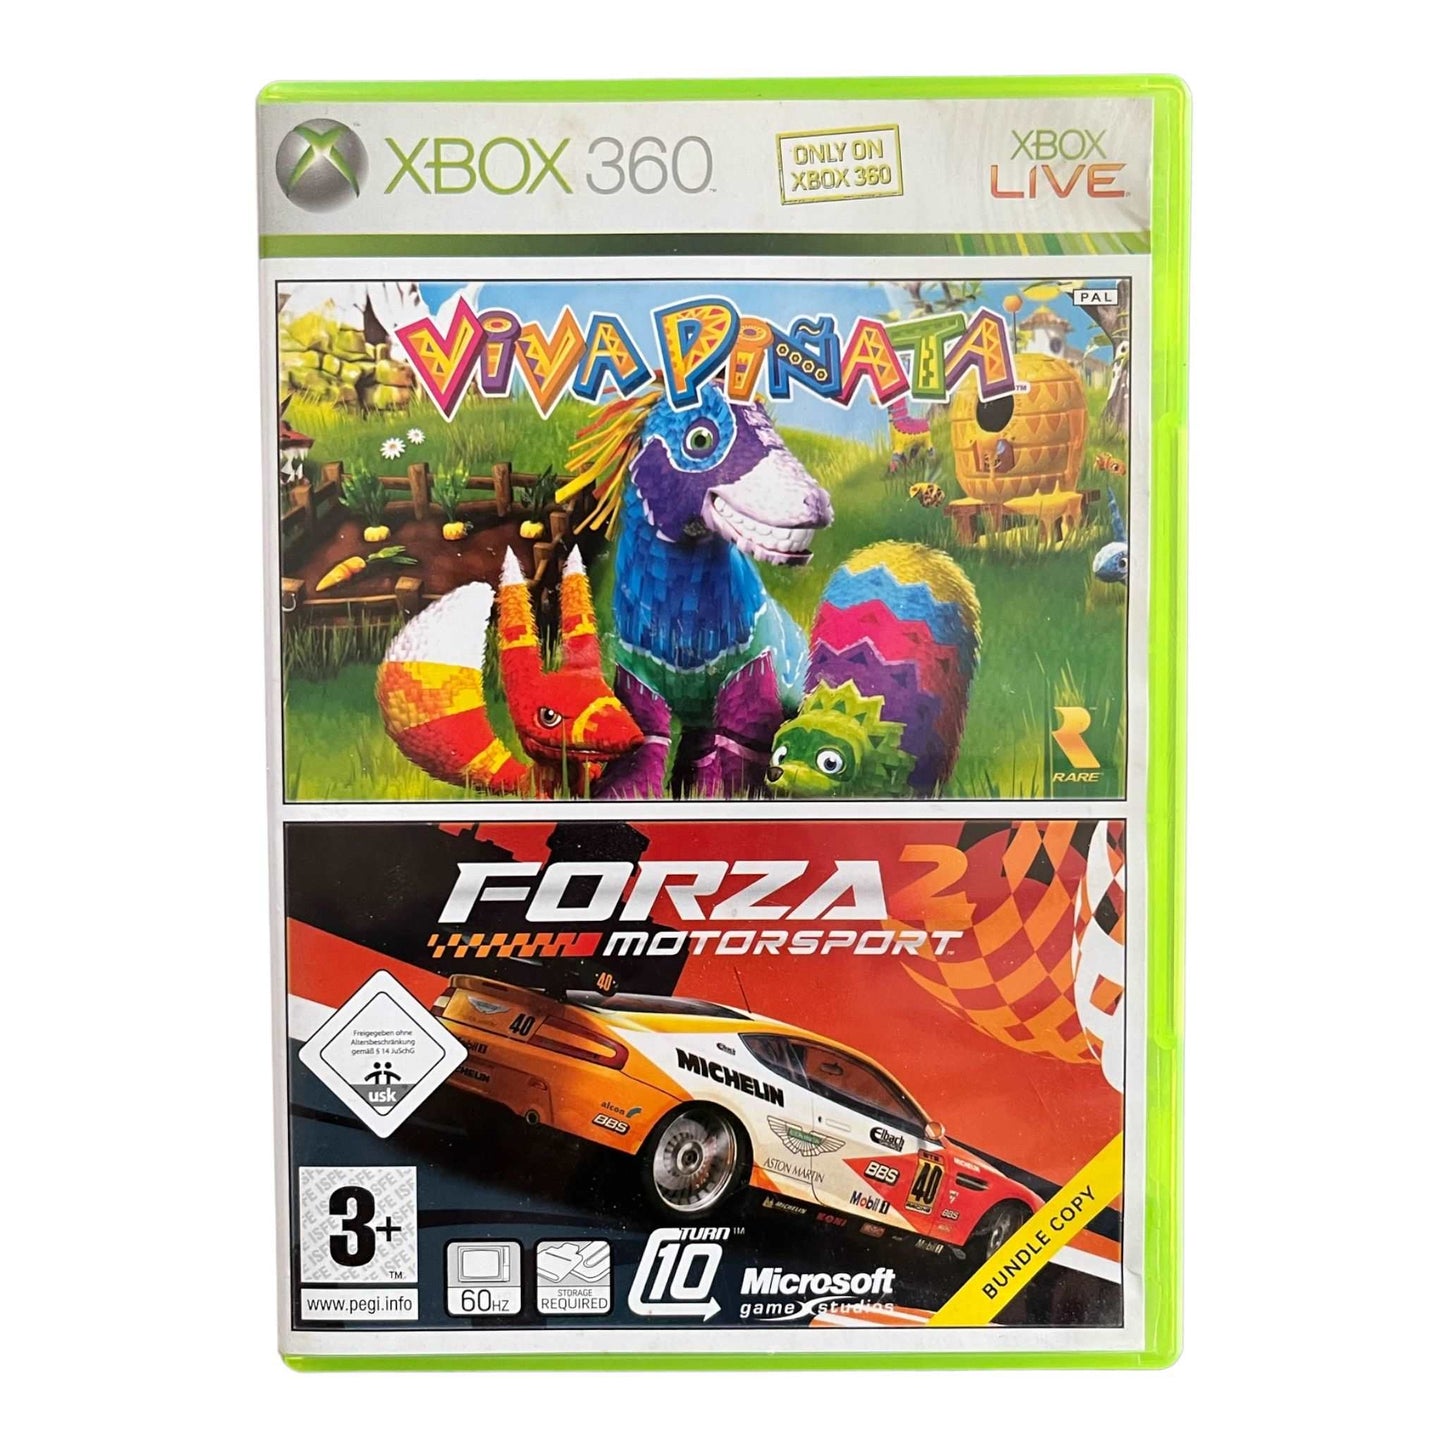 Forza Motorsport 2 & Viva Pinata - XBox 360